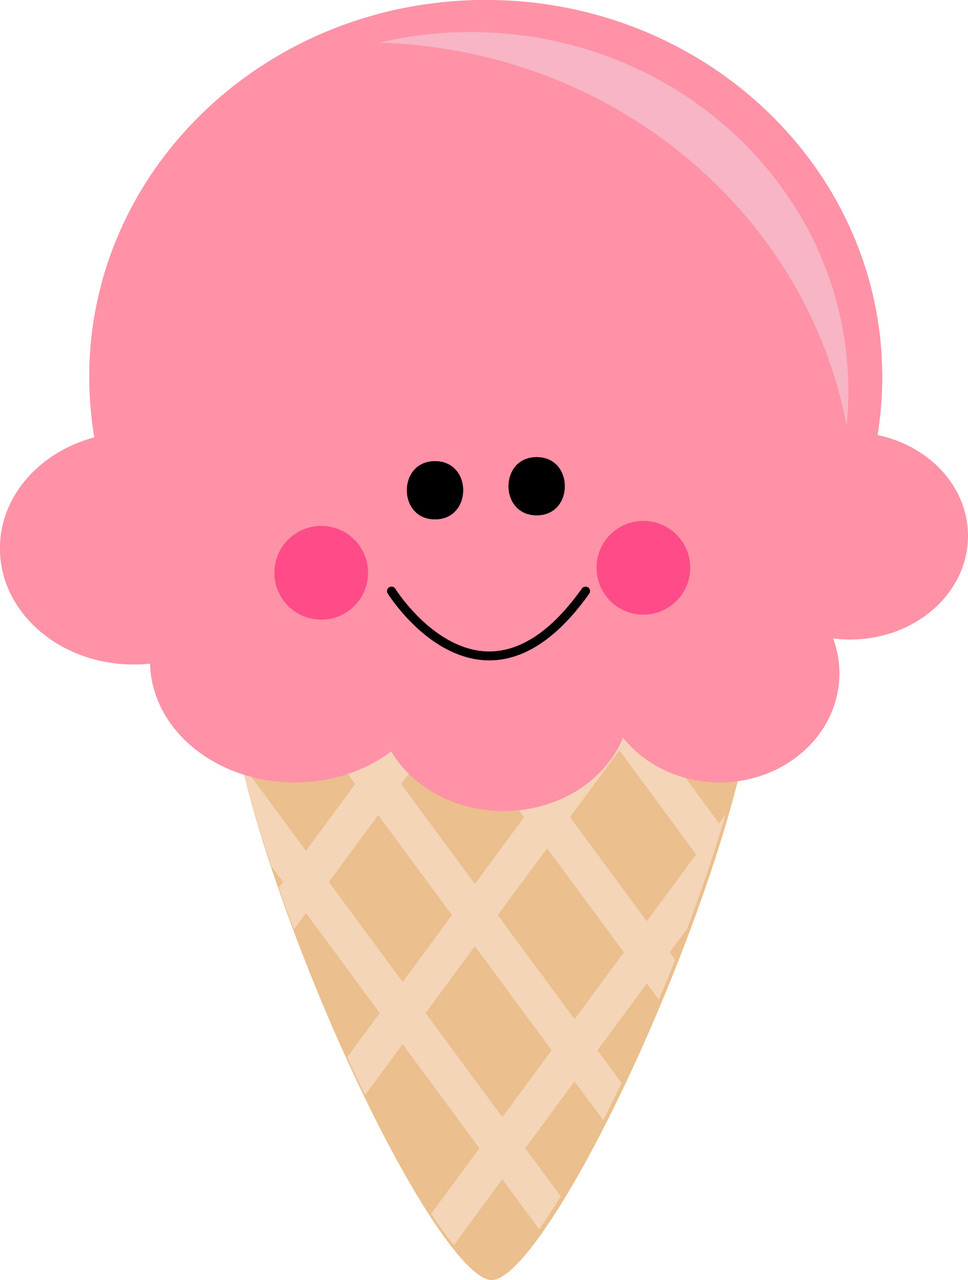 Cute Animated Ice Cream Cone